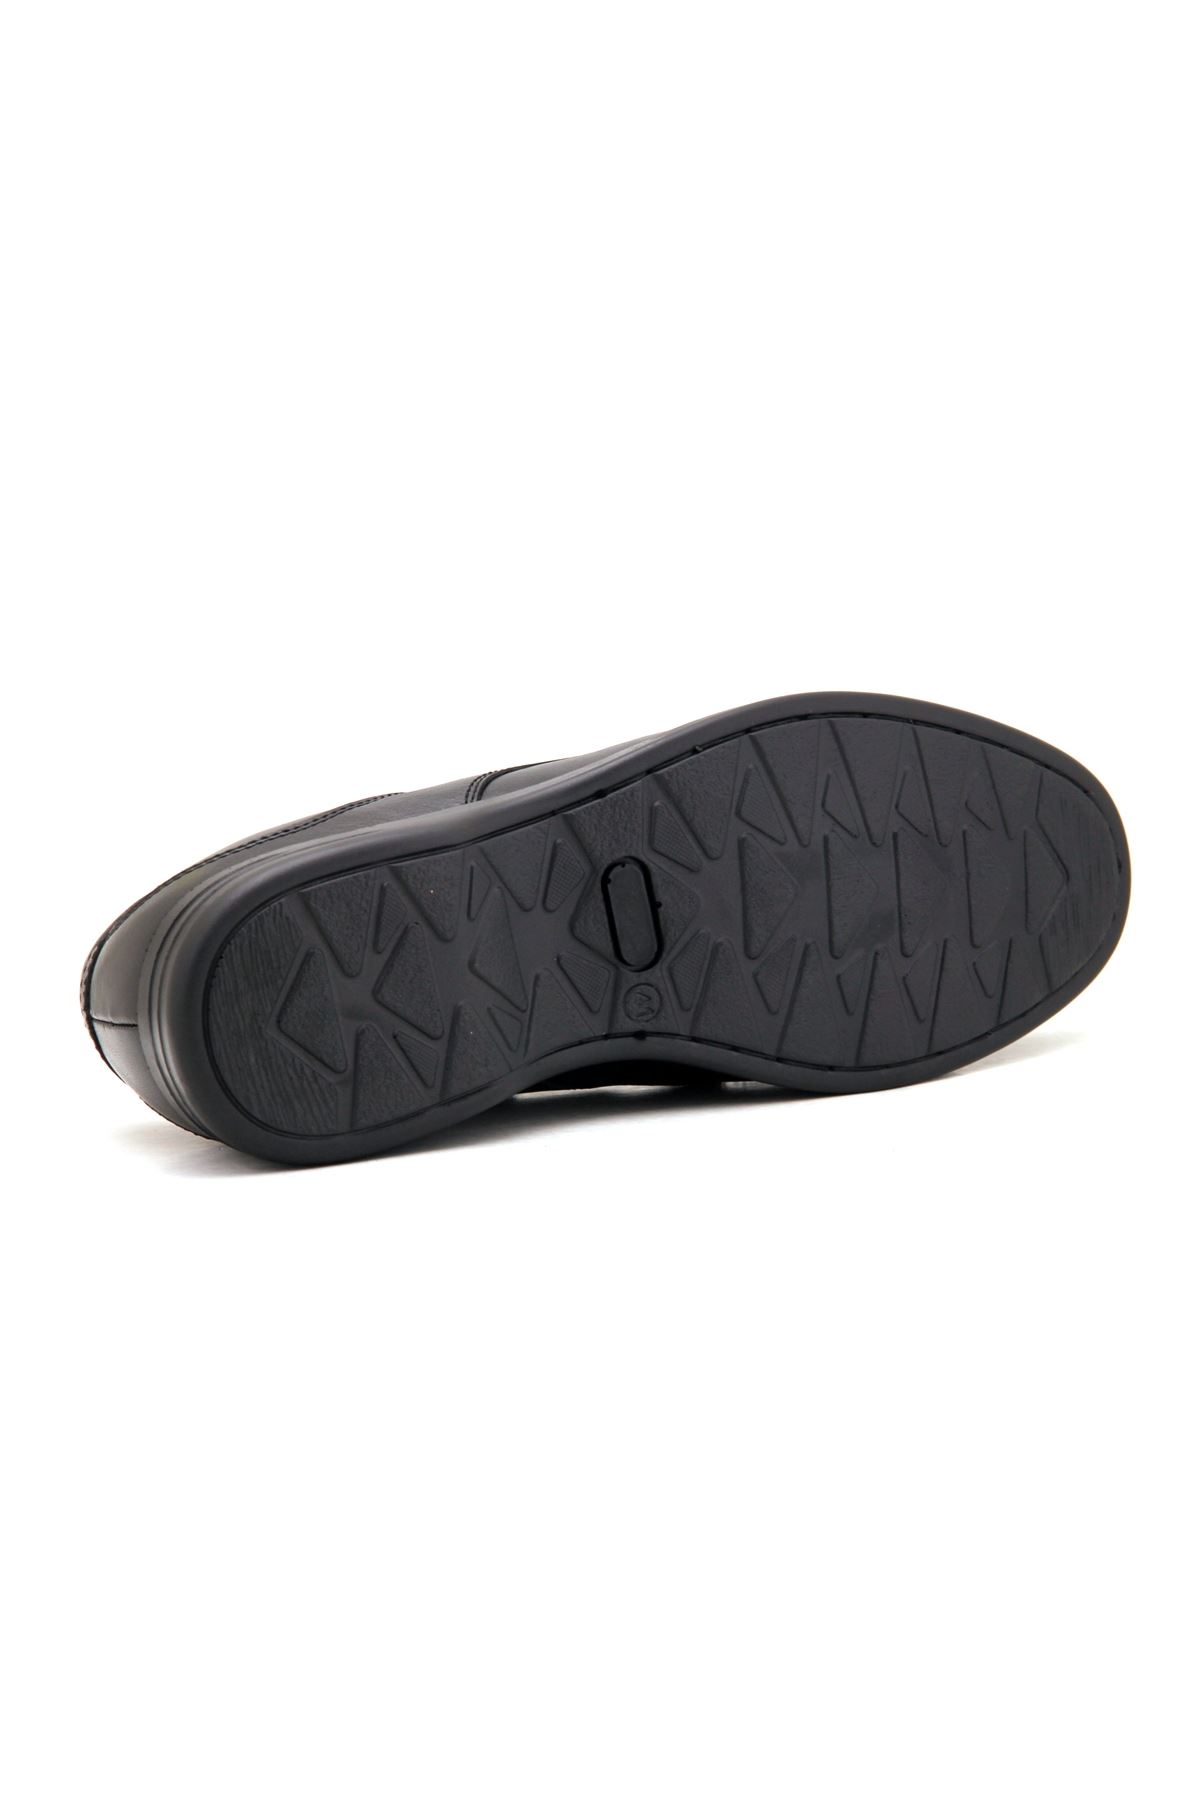 Forelli Soft (35302) Comfort Erkek Ayakkabı - Siyah